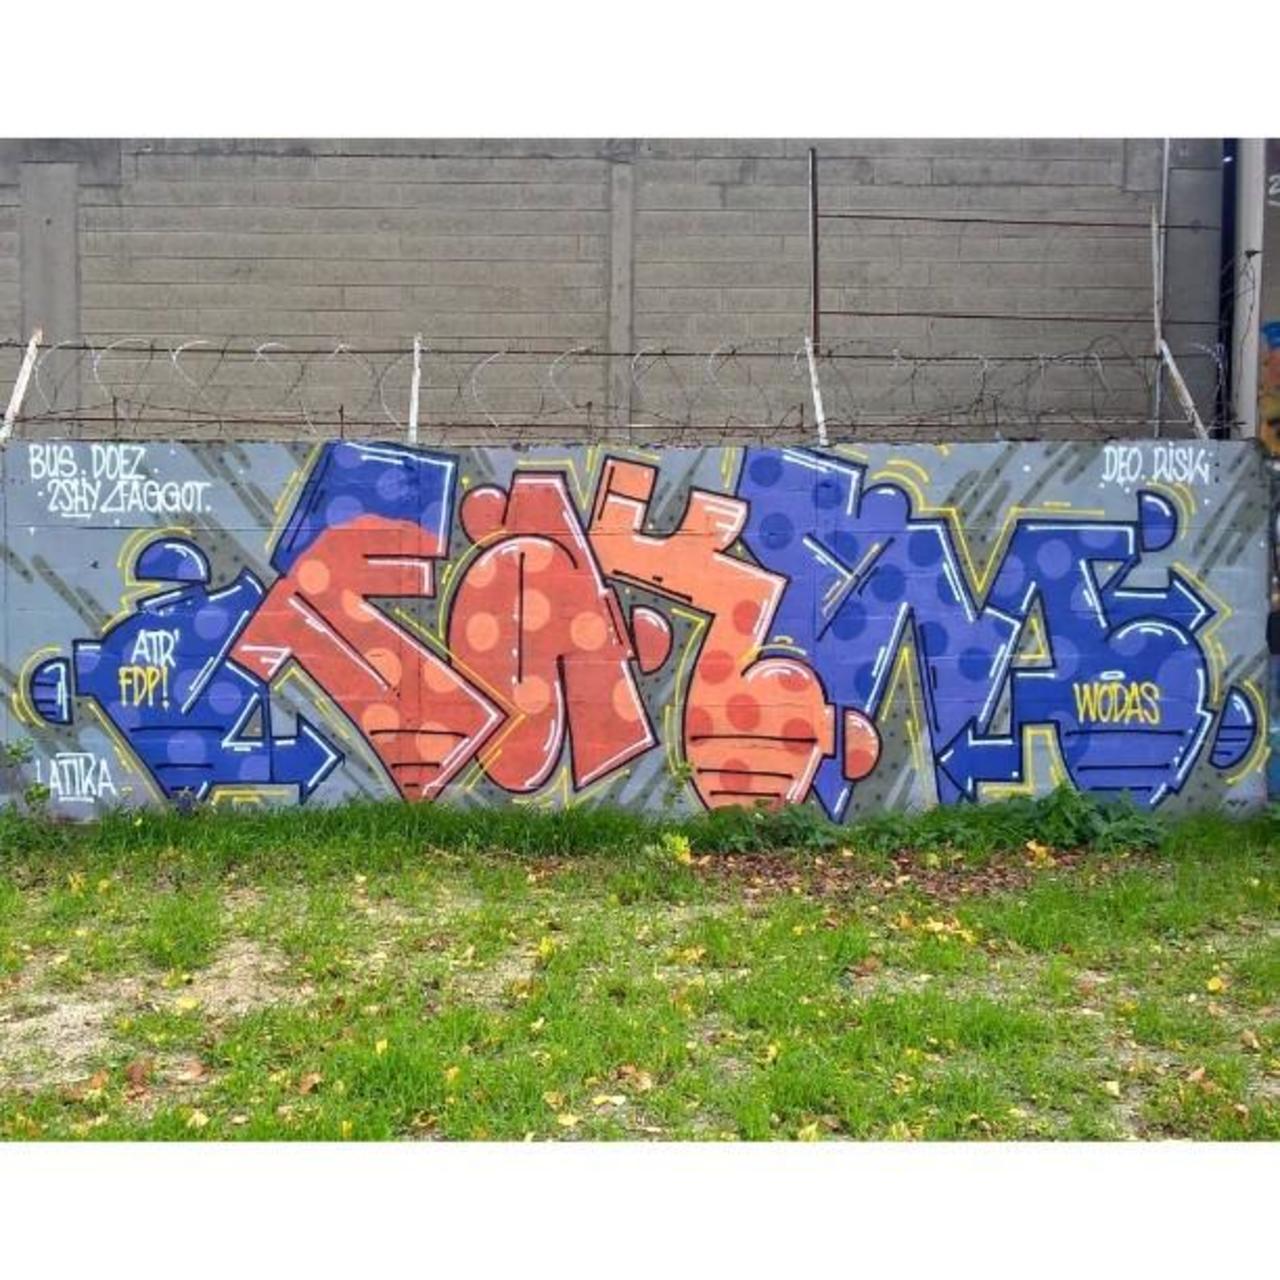 FAKE
#fdp #wodas #atr #streetart #graffiti #graff #art #fatcap #bombing #sprayart #spraycanart #wallart #handstyle … http://t.co/XtblisHGIo